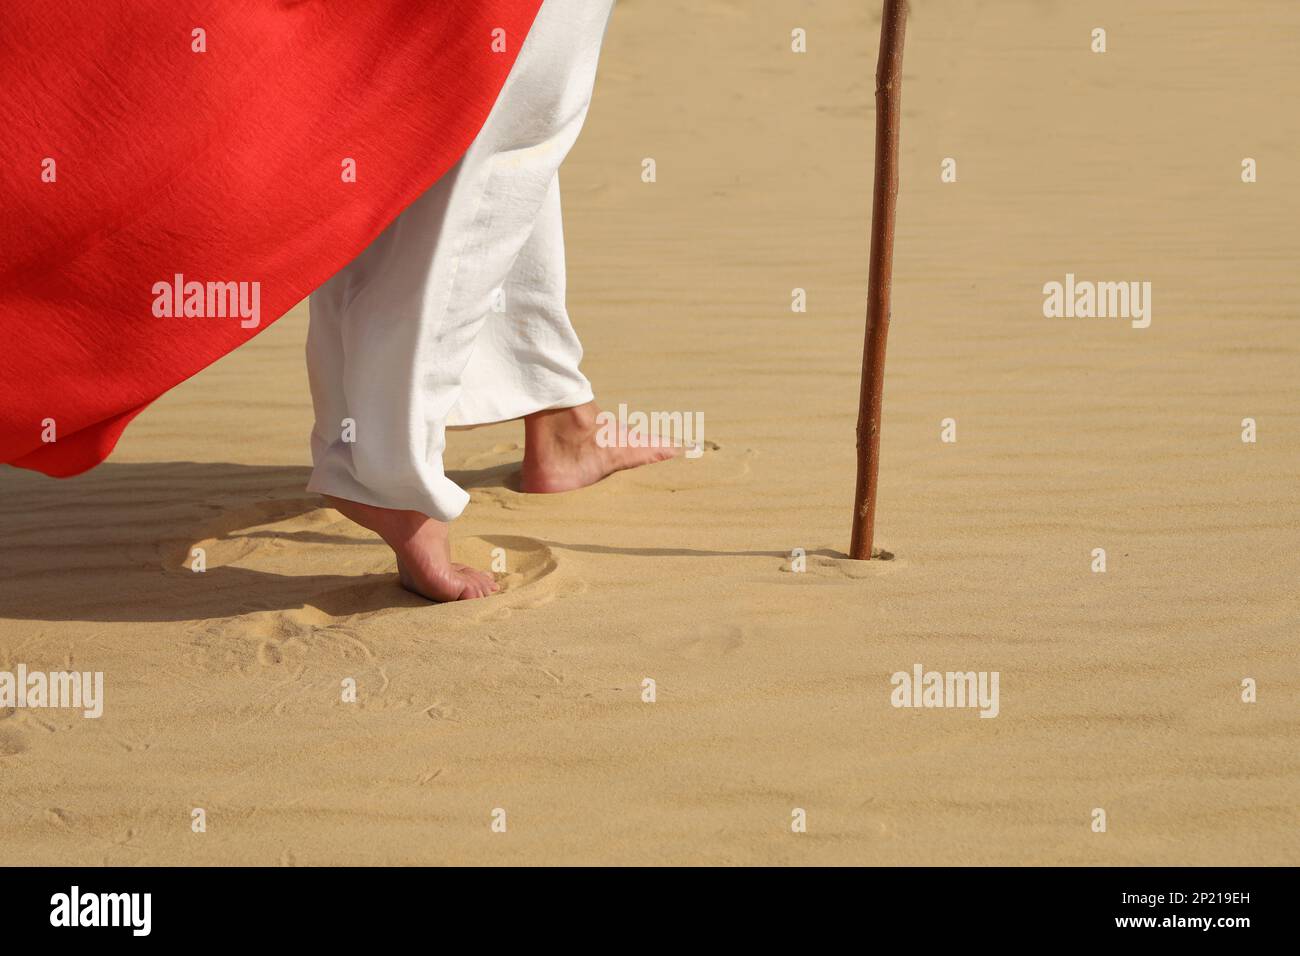 Jesus Christ walking in desert, closeup view Stock Photo - Alamy